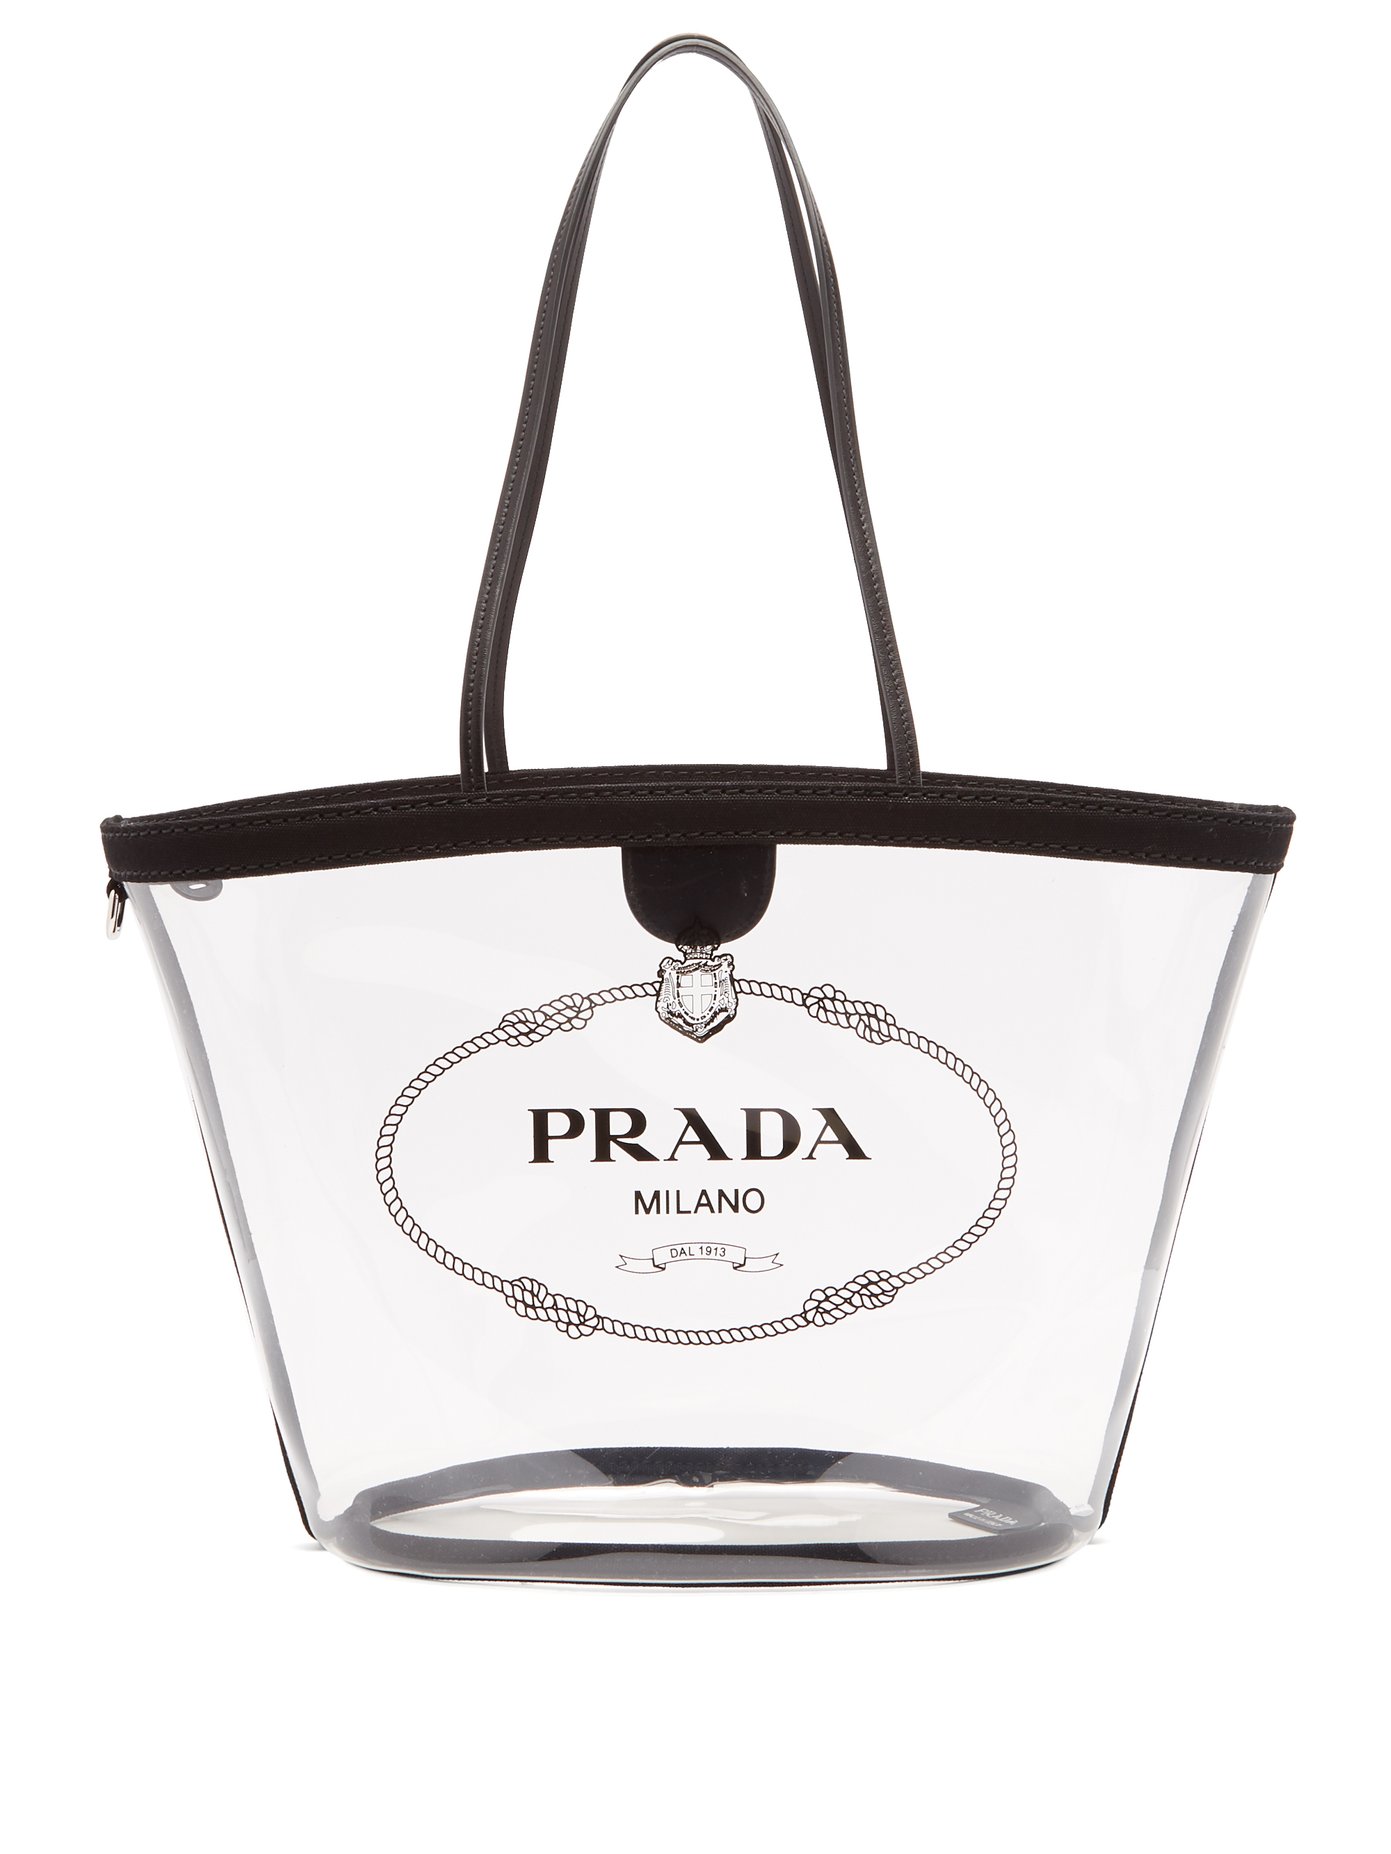 Prada (Matches Fashion) 45 465 руб.